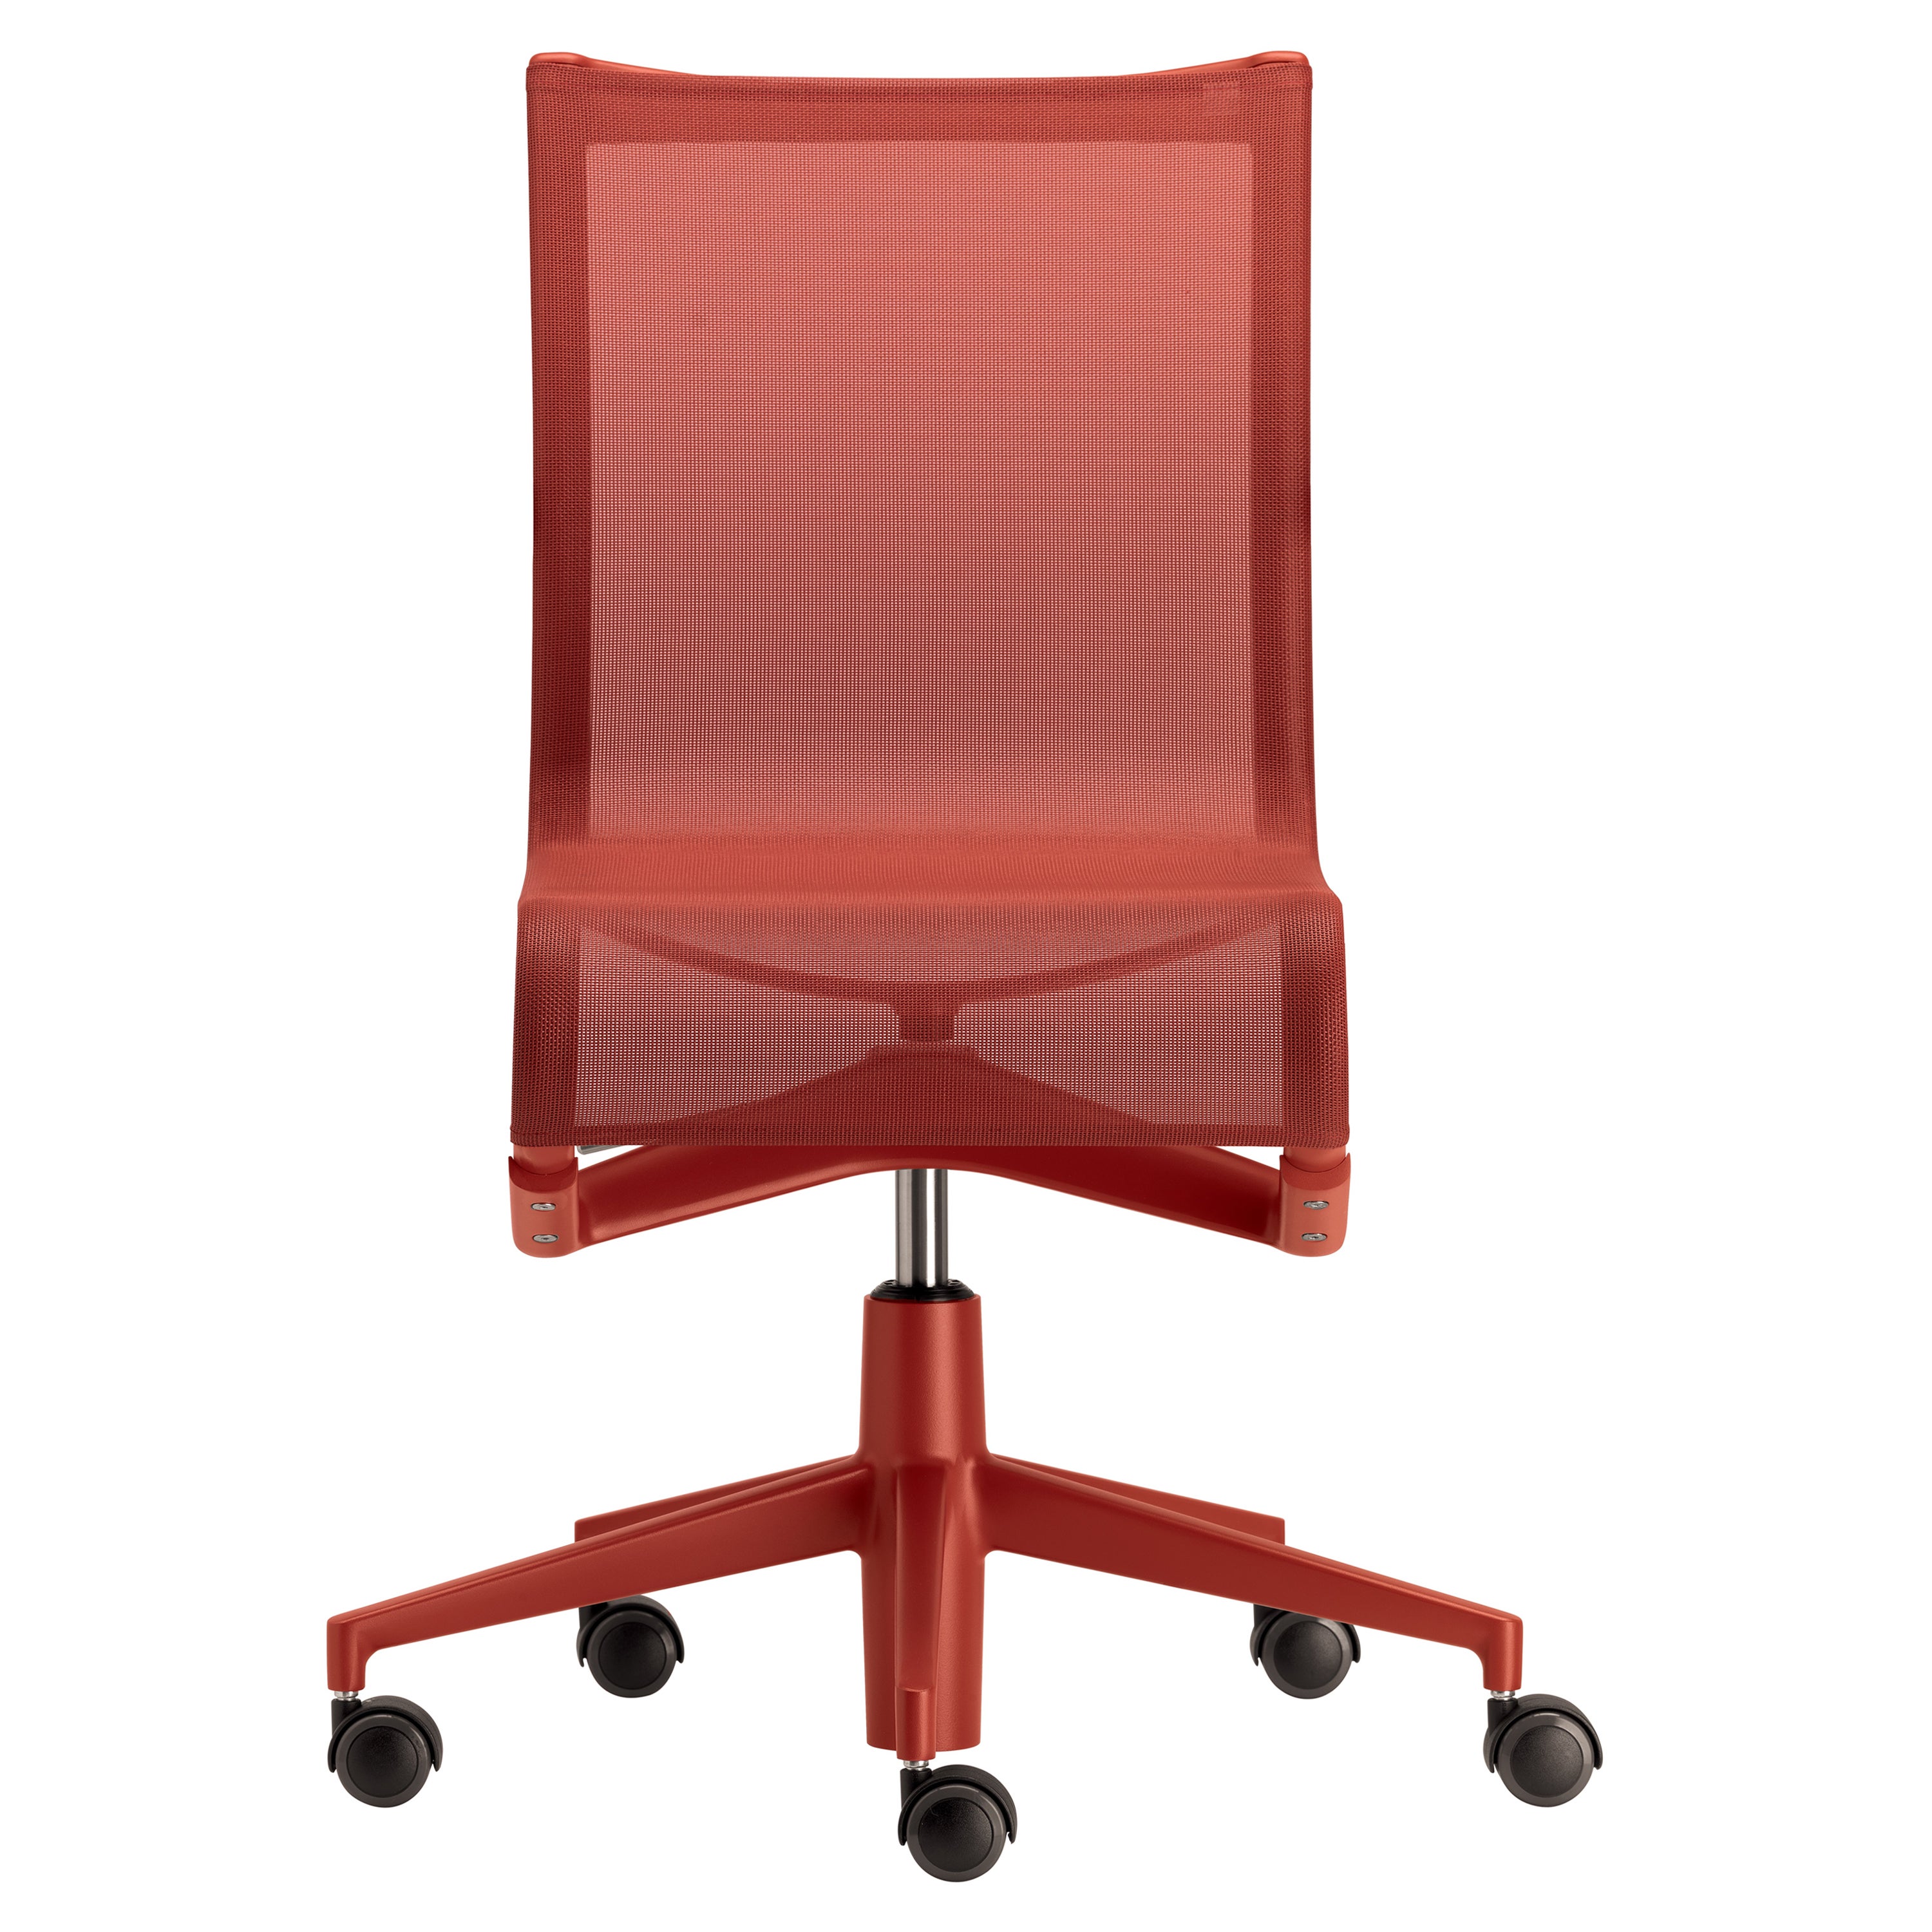 Alias 432 Rollingframe 44 Stuhl aus Korallenrotem Mesh und rot lackiertem Aluminiumrahmen im Angebot